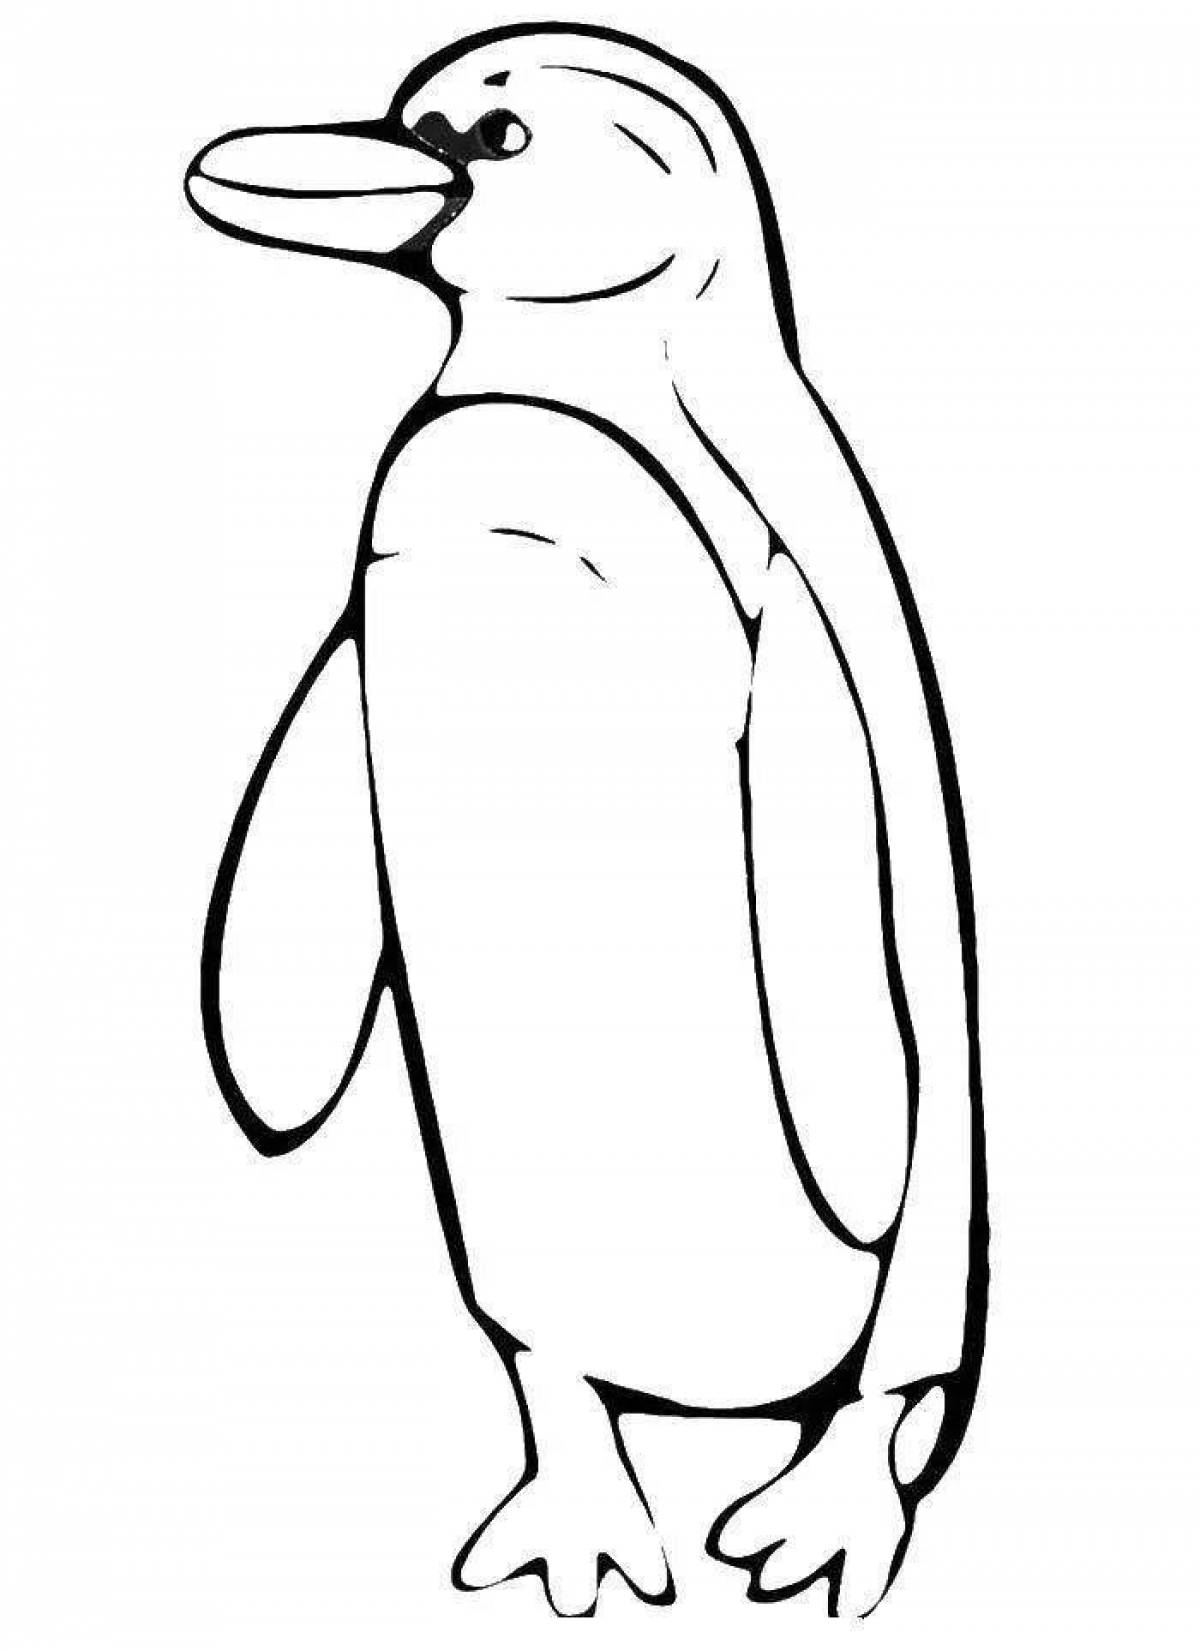 Penguin live coloring